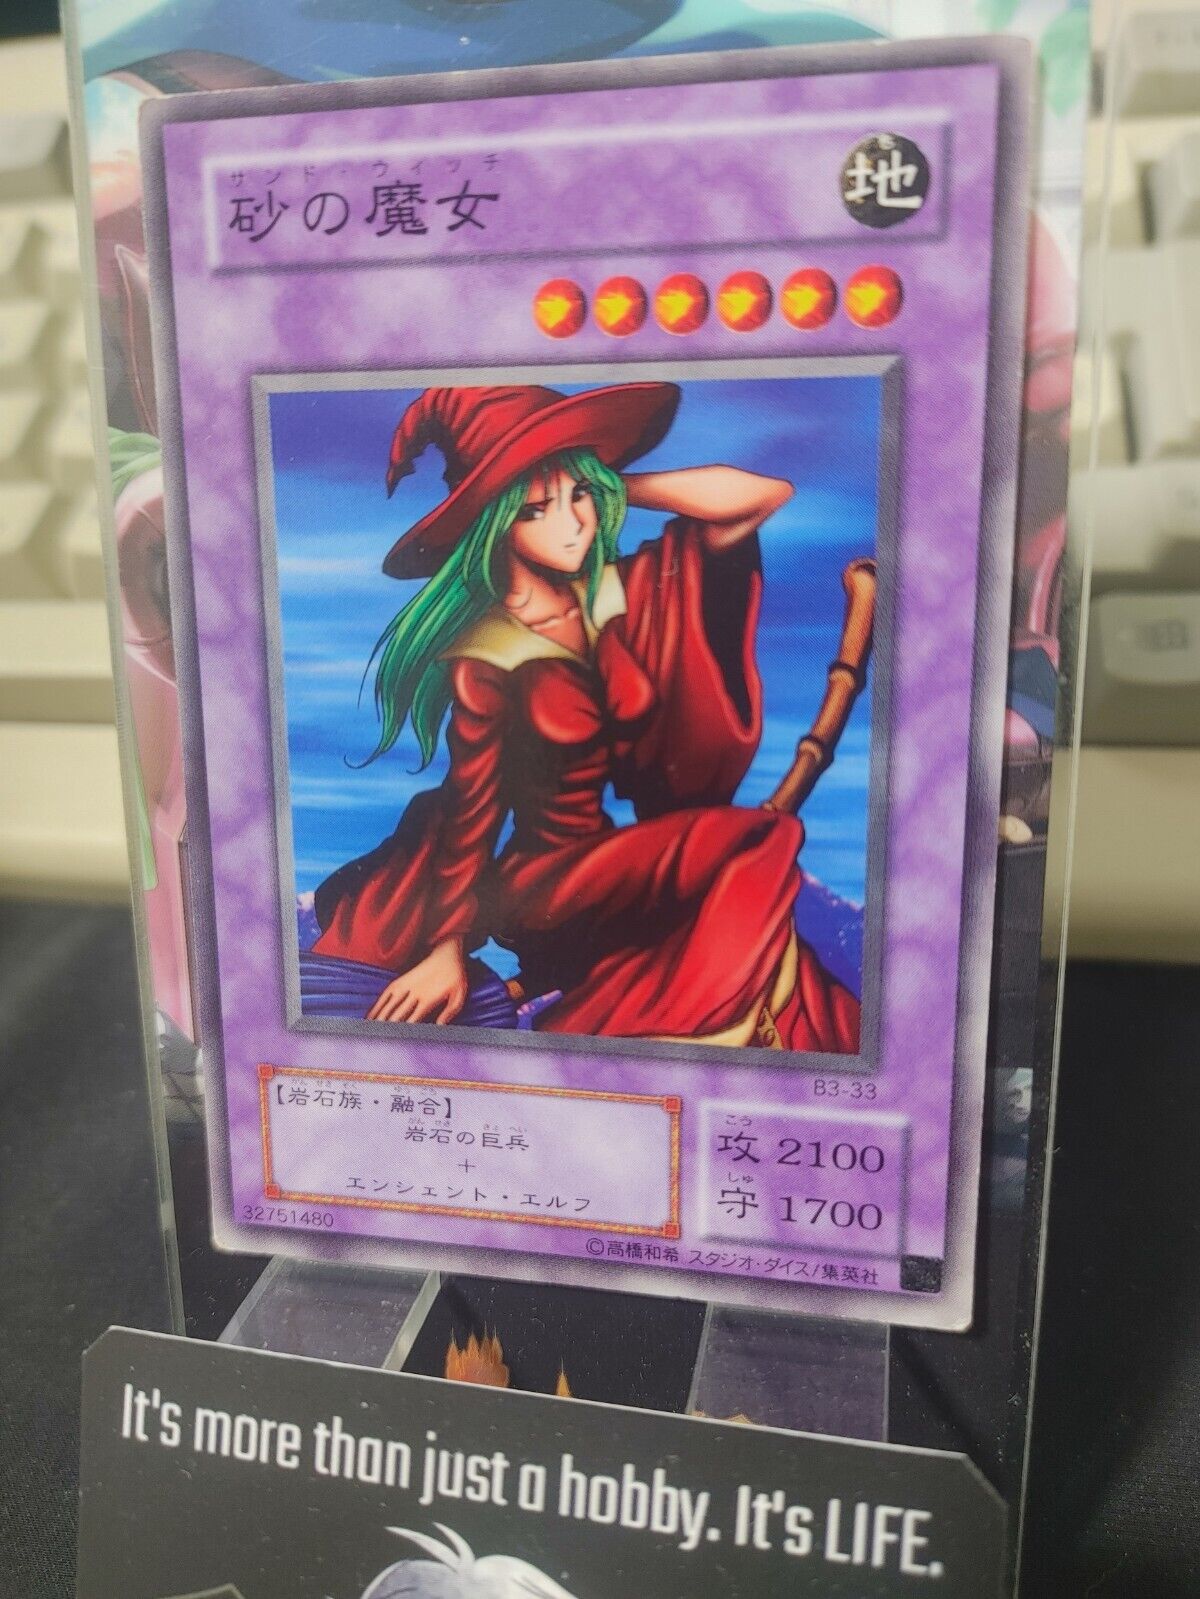 Mystical Sand Yu-Gi-Oh Yugioh B3-33 Retro Card Original UNCENSORED  JAPAN